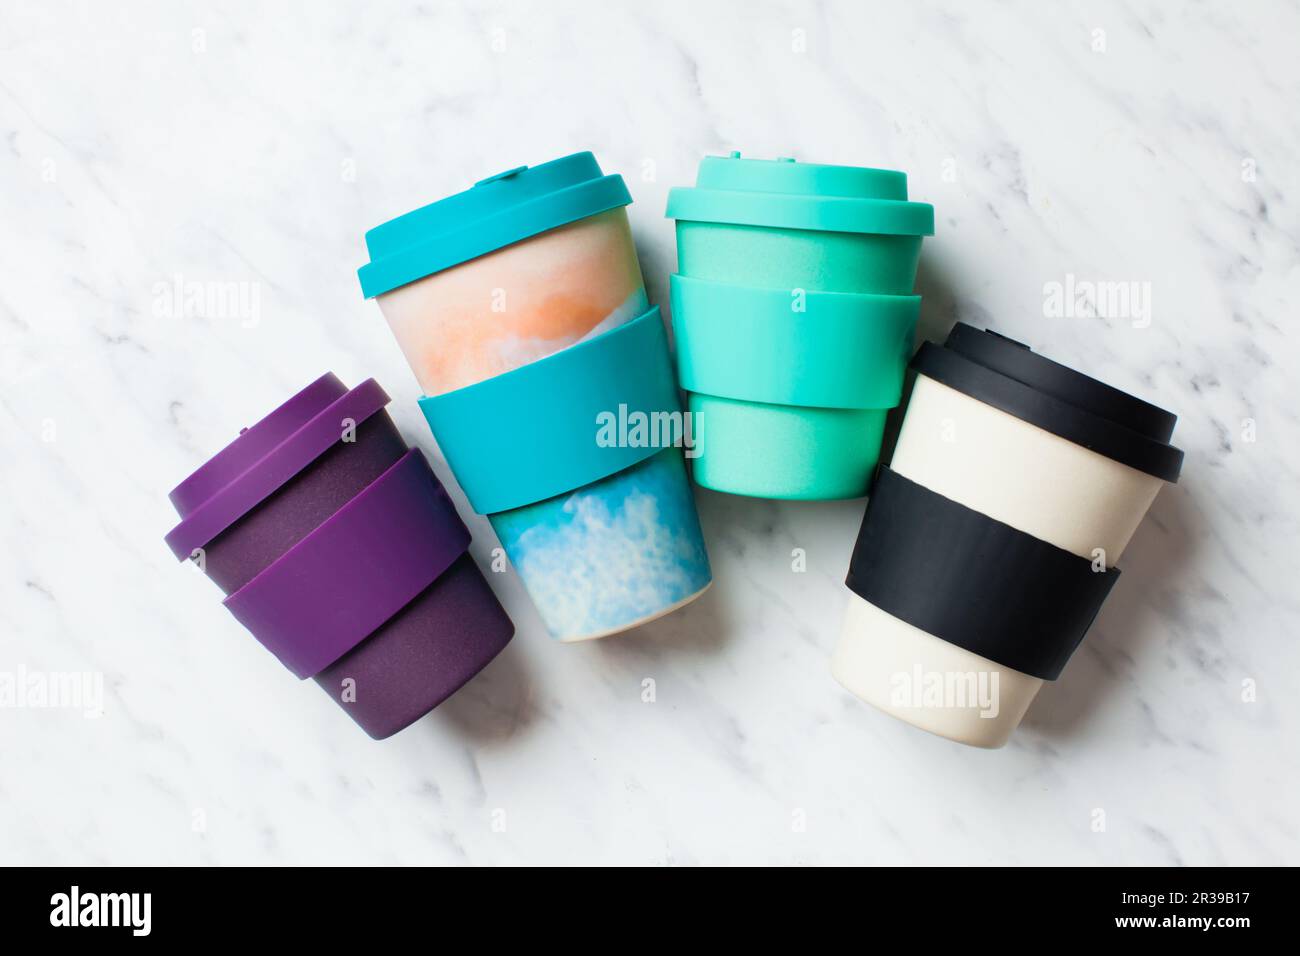 https://c8.alamy.com/comp/2R39B17/bamboo-reusable-cups-for-coffee-or-tea-to-go-2R39B17.jpg